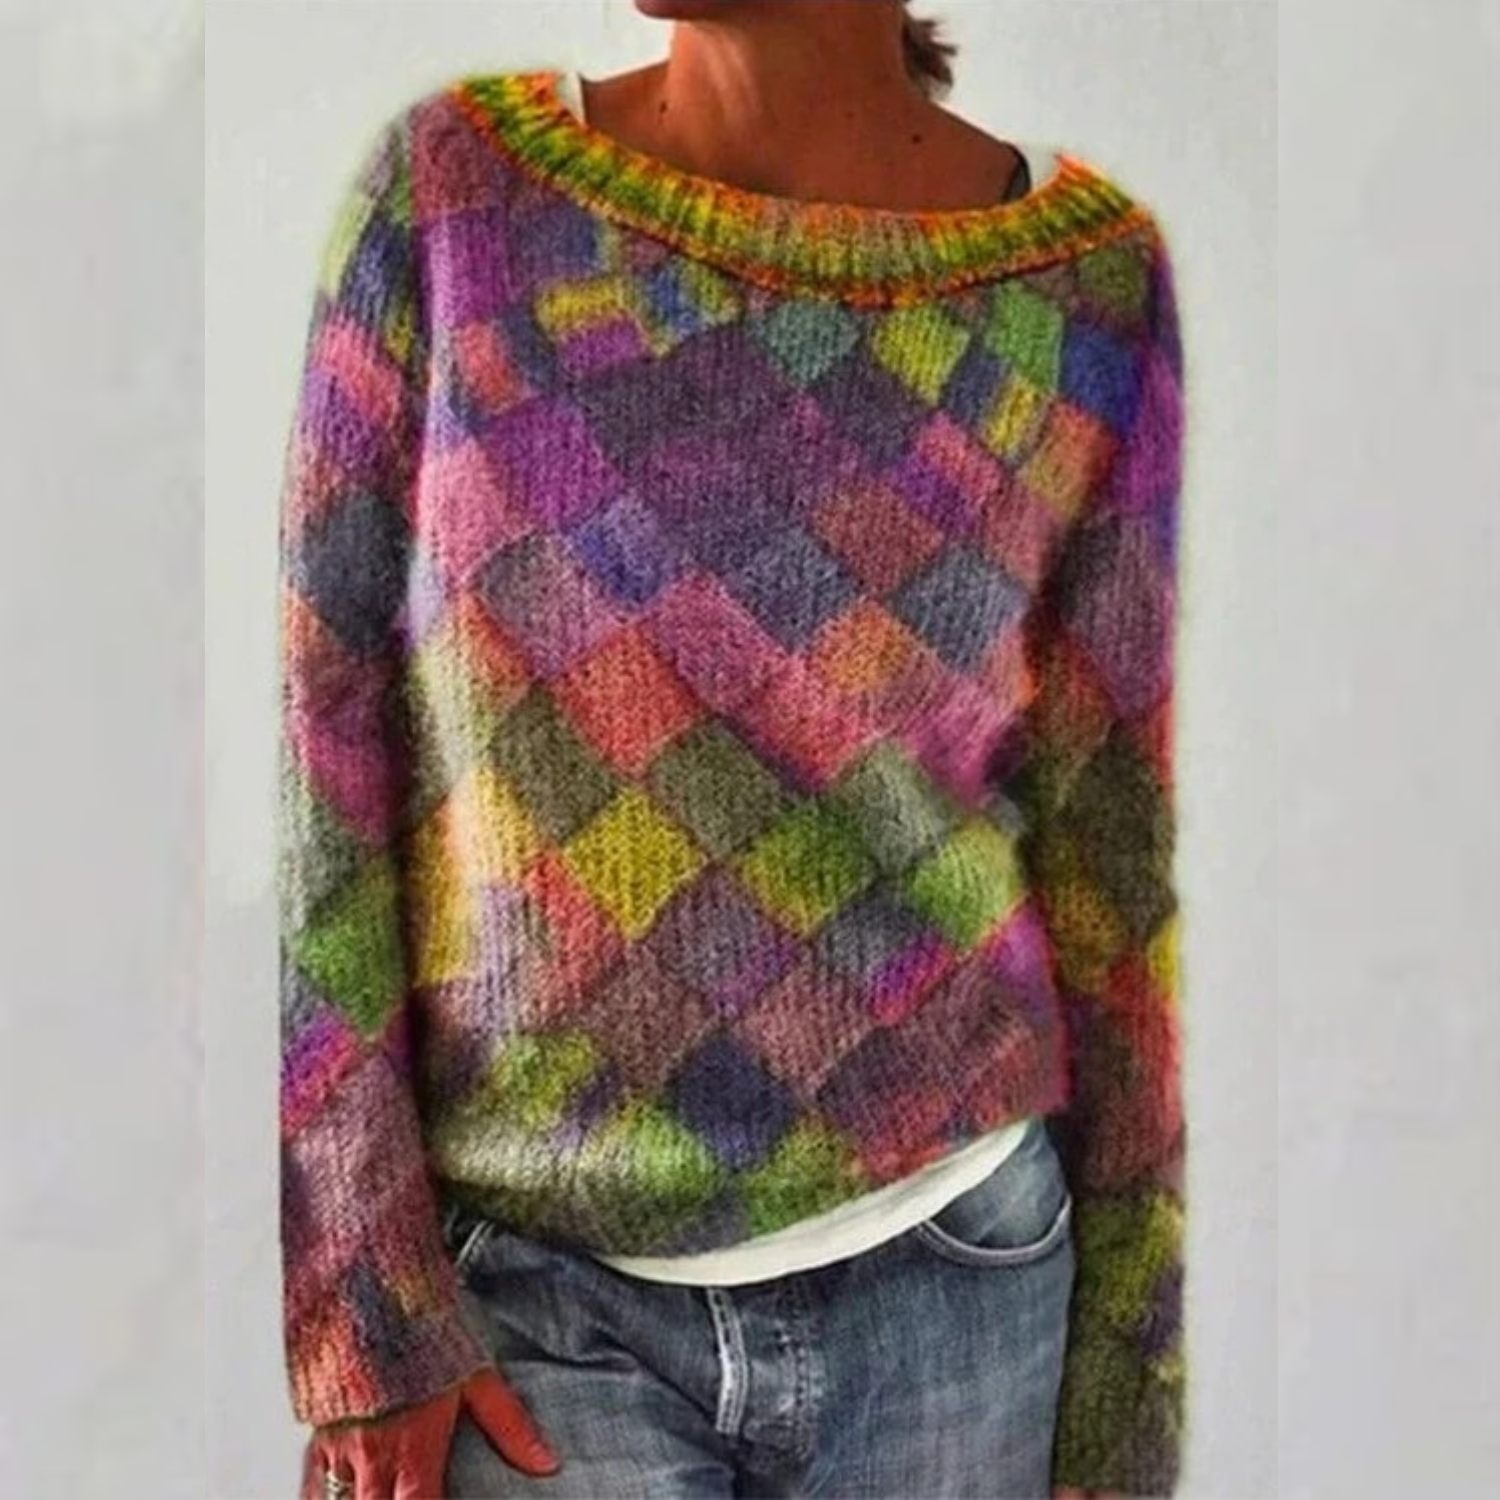 KnitMagic - Where fashion meets warmth! 